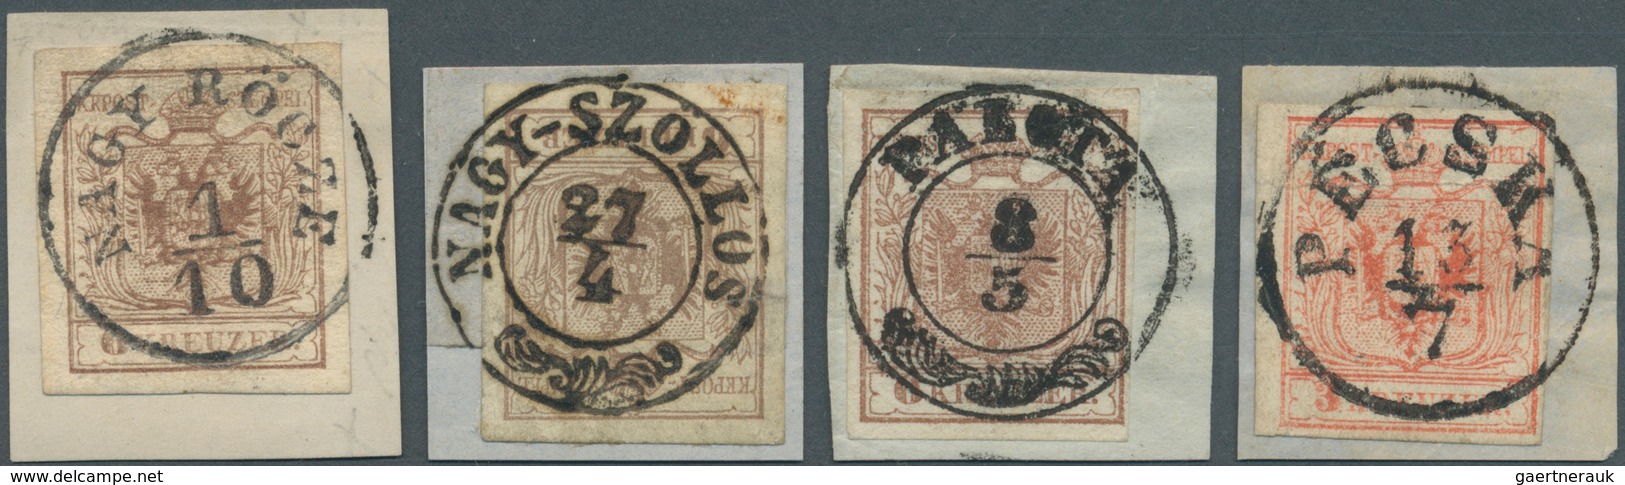 15730 Österreich - Stempel: 1850, "NAGY RÖCZE" K1, "NAGY-SZOLLOS" Zier-K2, "PAECTA" Zier-K2 Und "PECSKA" K - Maschinenstempel (EMA)